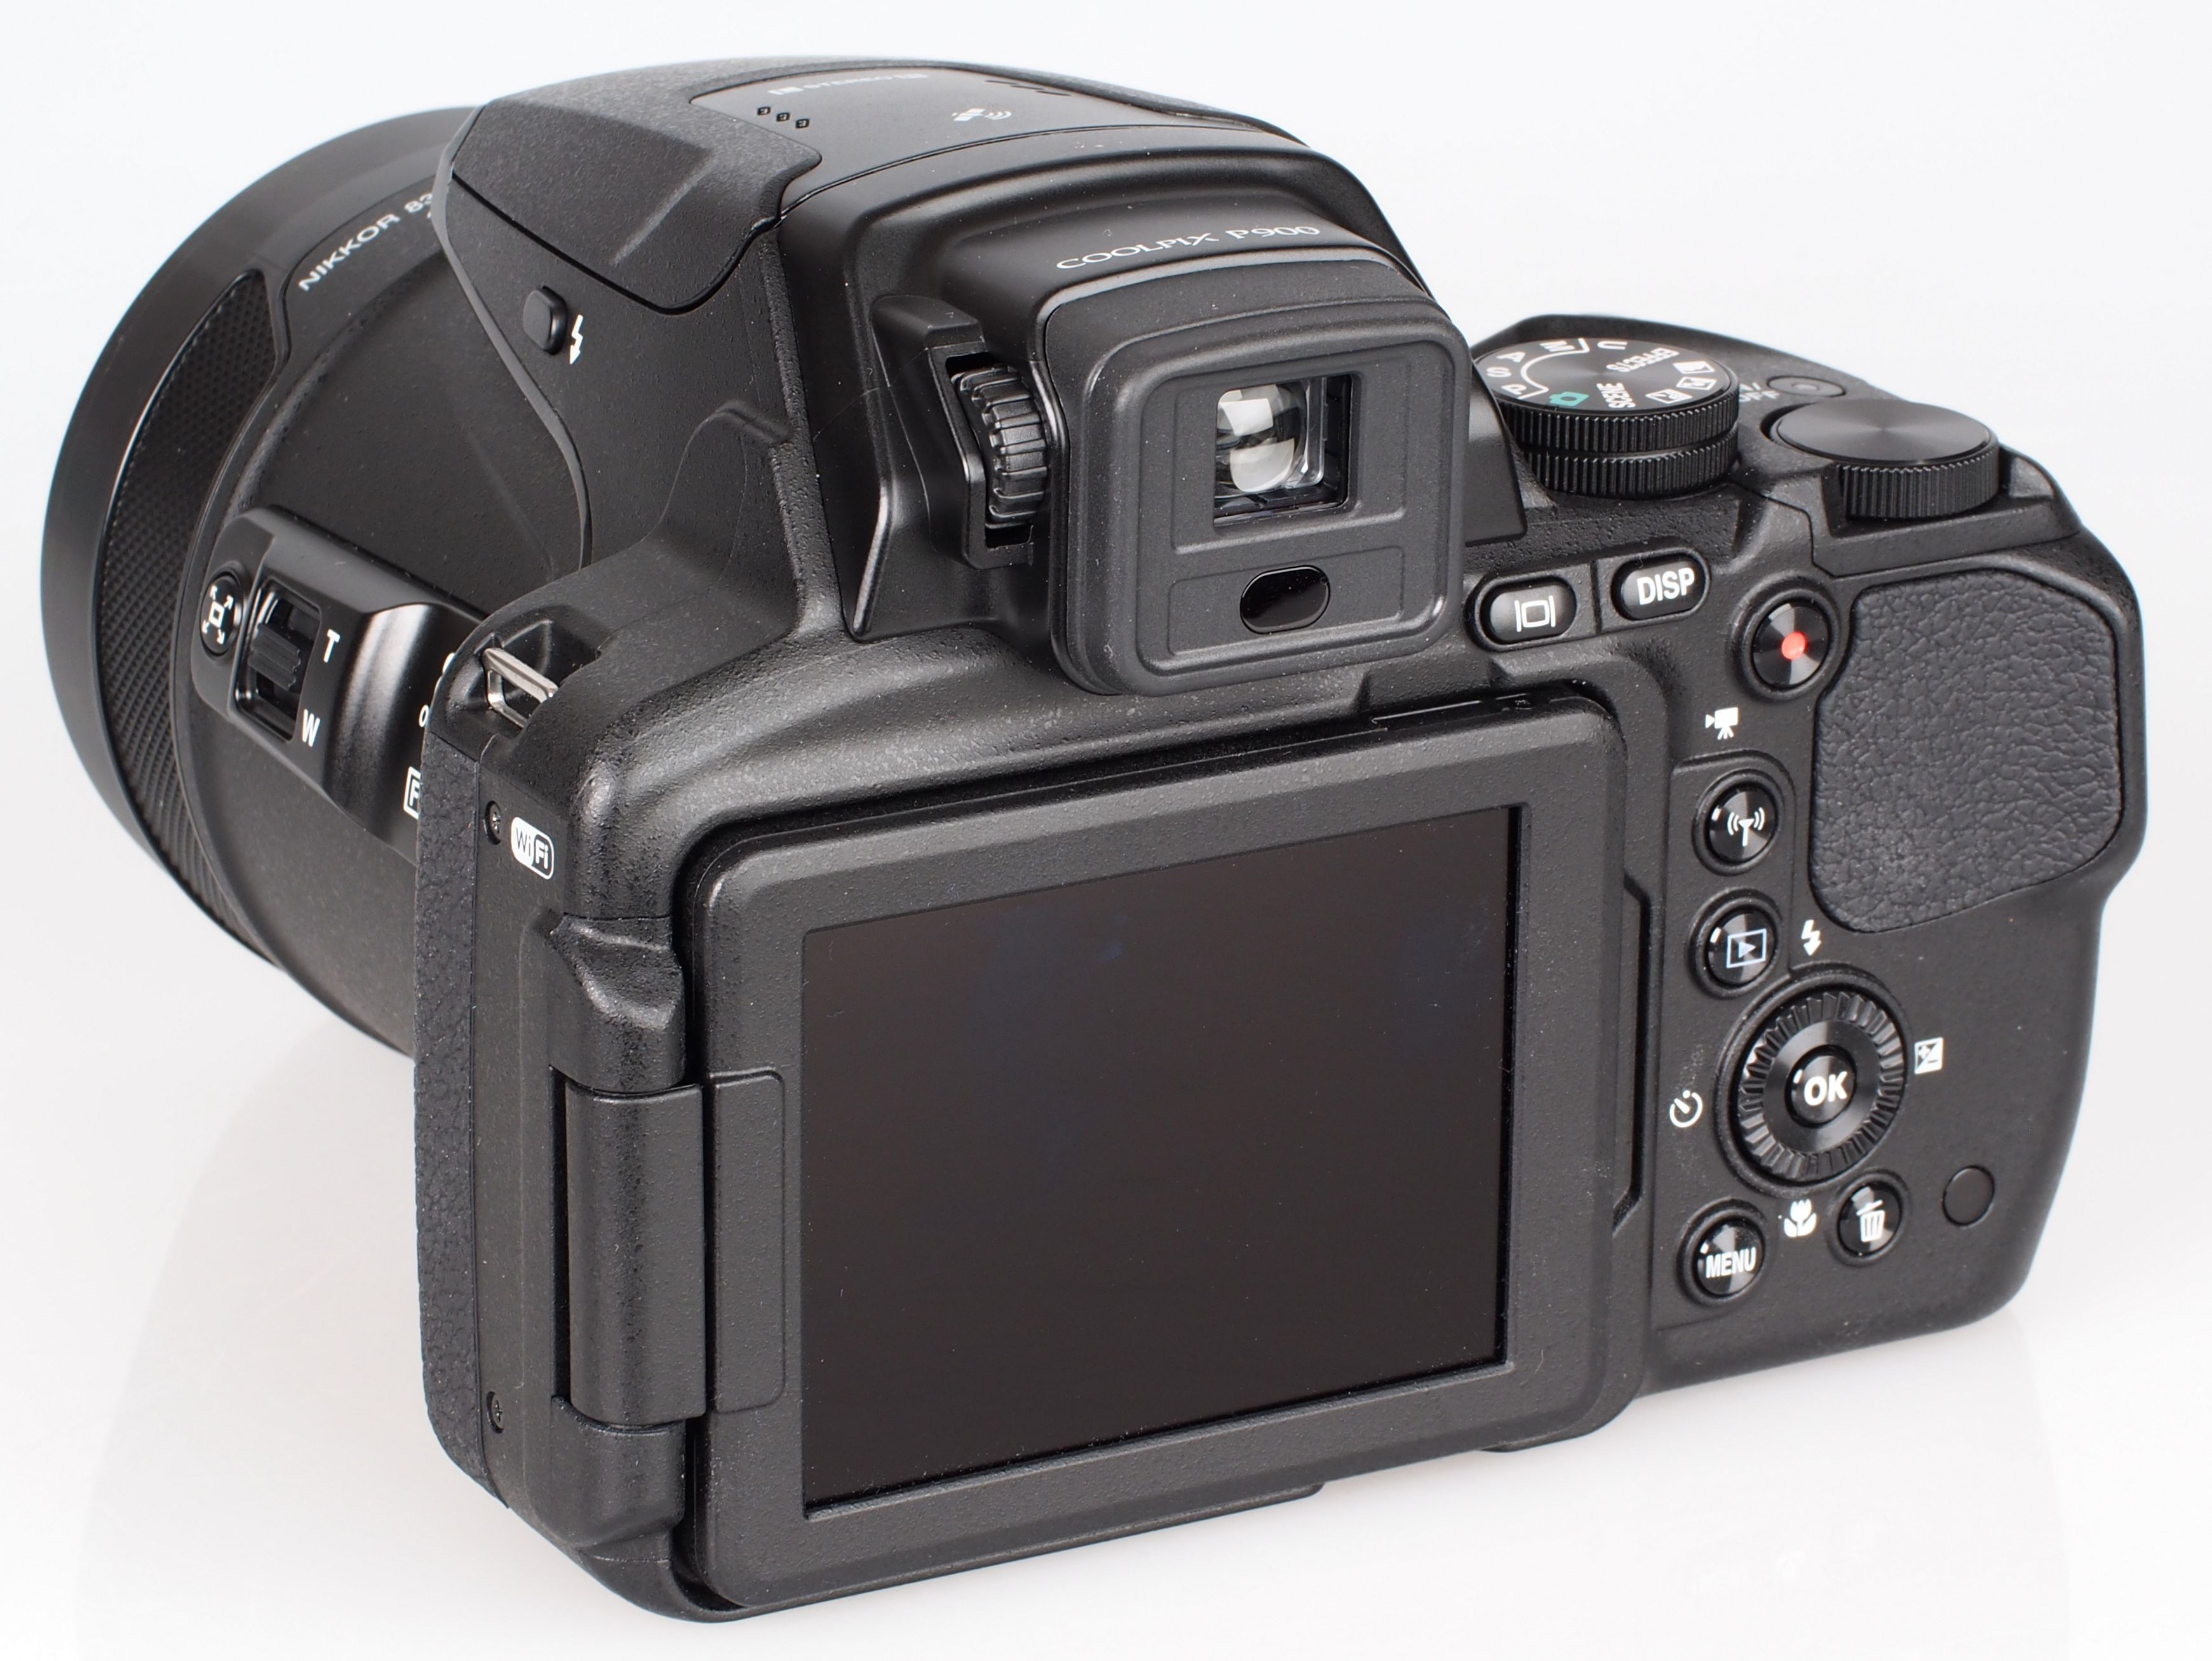 Nikon COOLPIX P900  Read Reviews, Tech Specs, Price & More